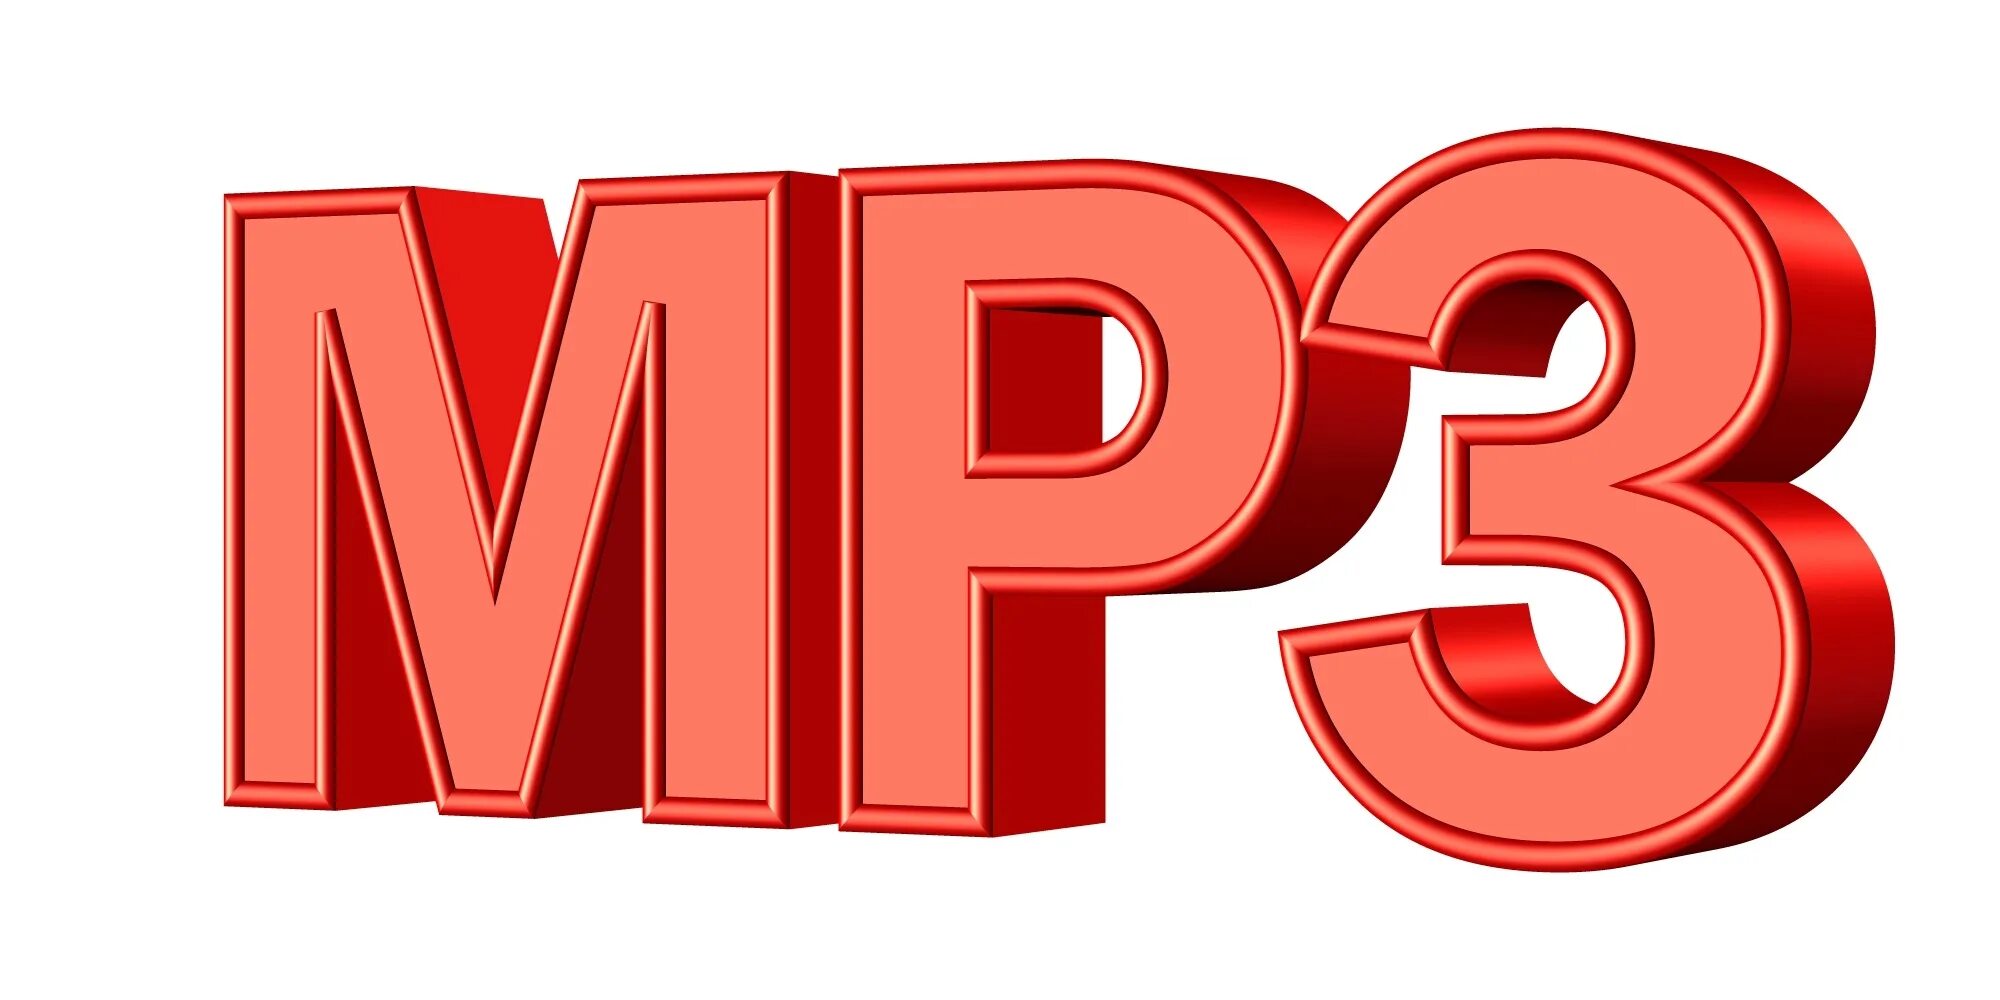 Mp3 логотип. Mp3 надпись. Значок мр3. Логотип МП. Мп 3 простил